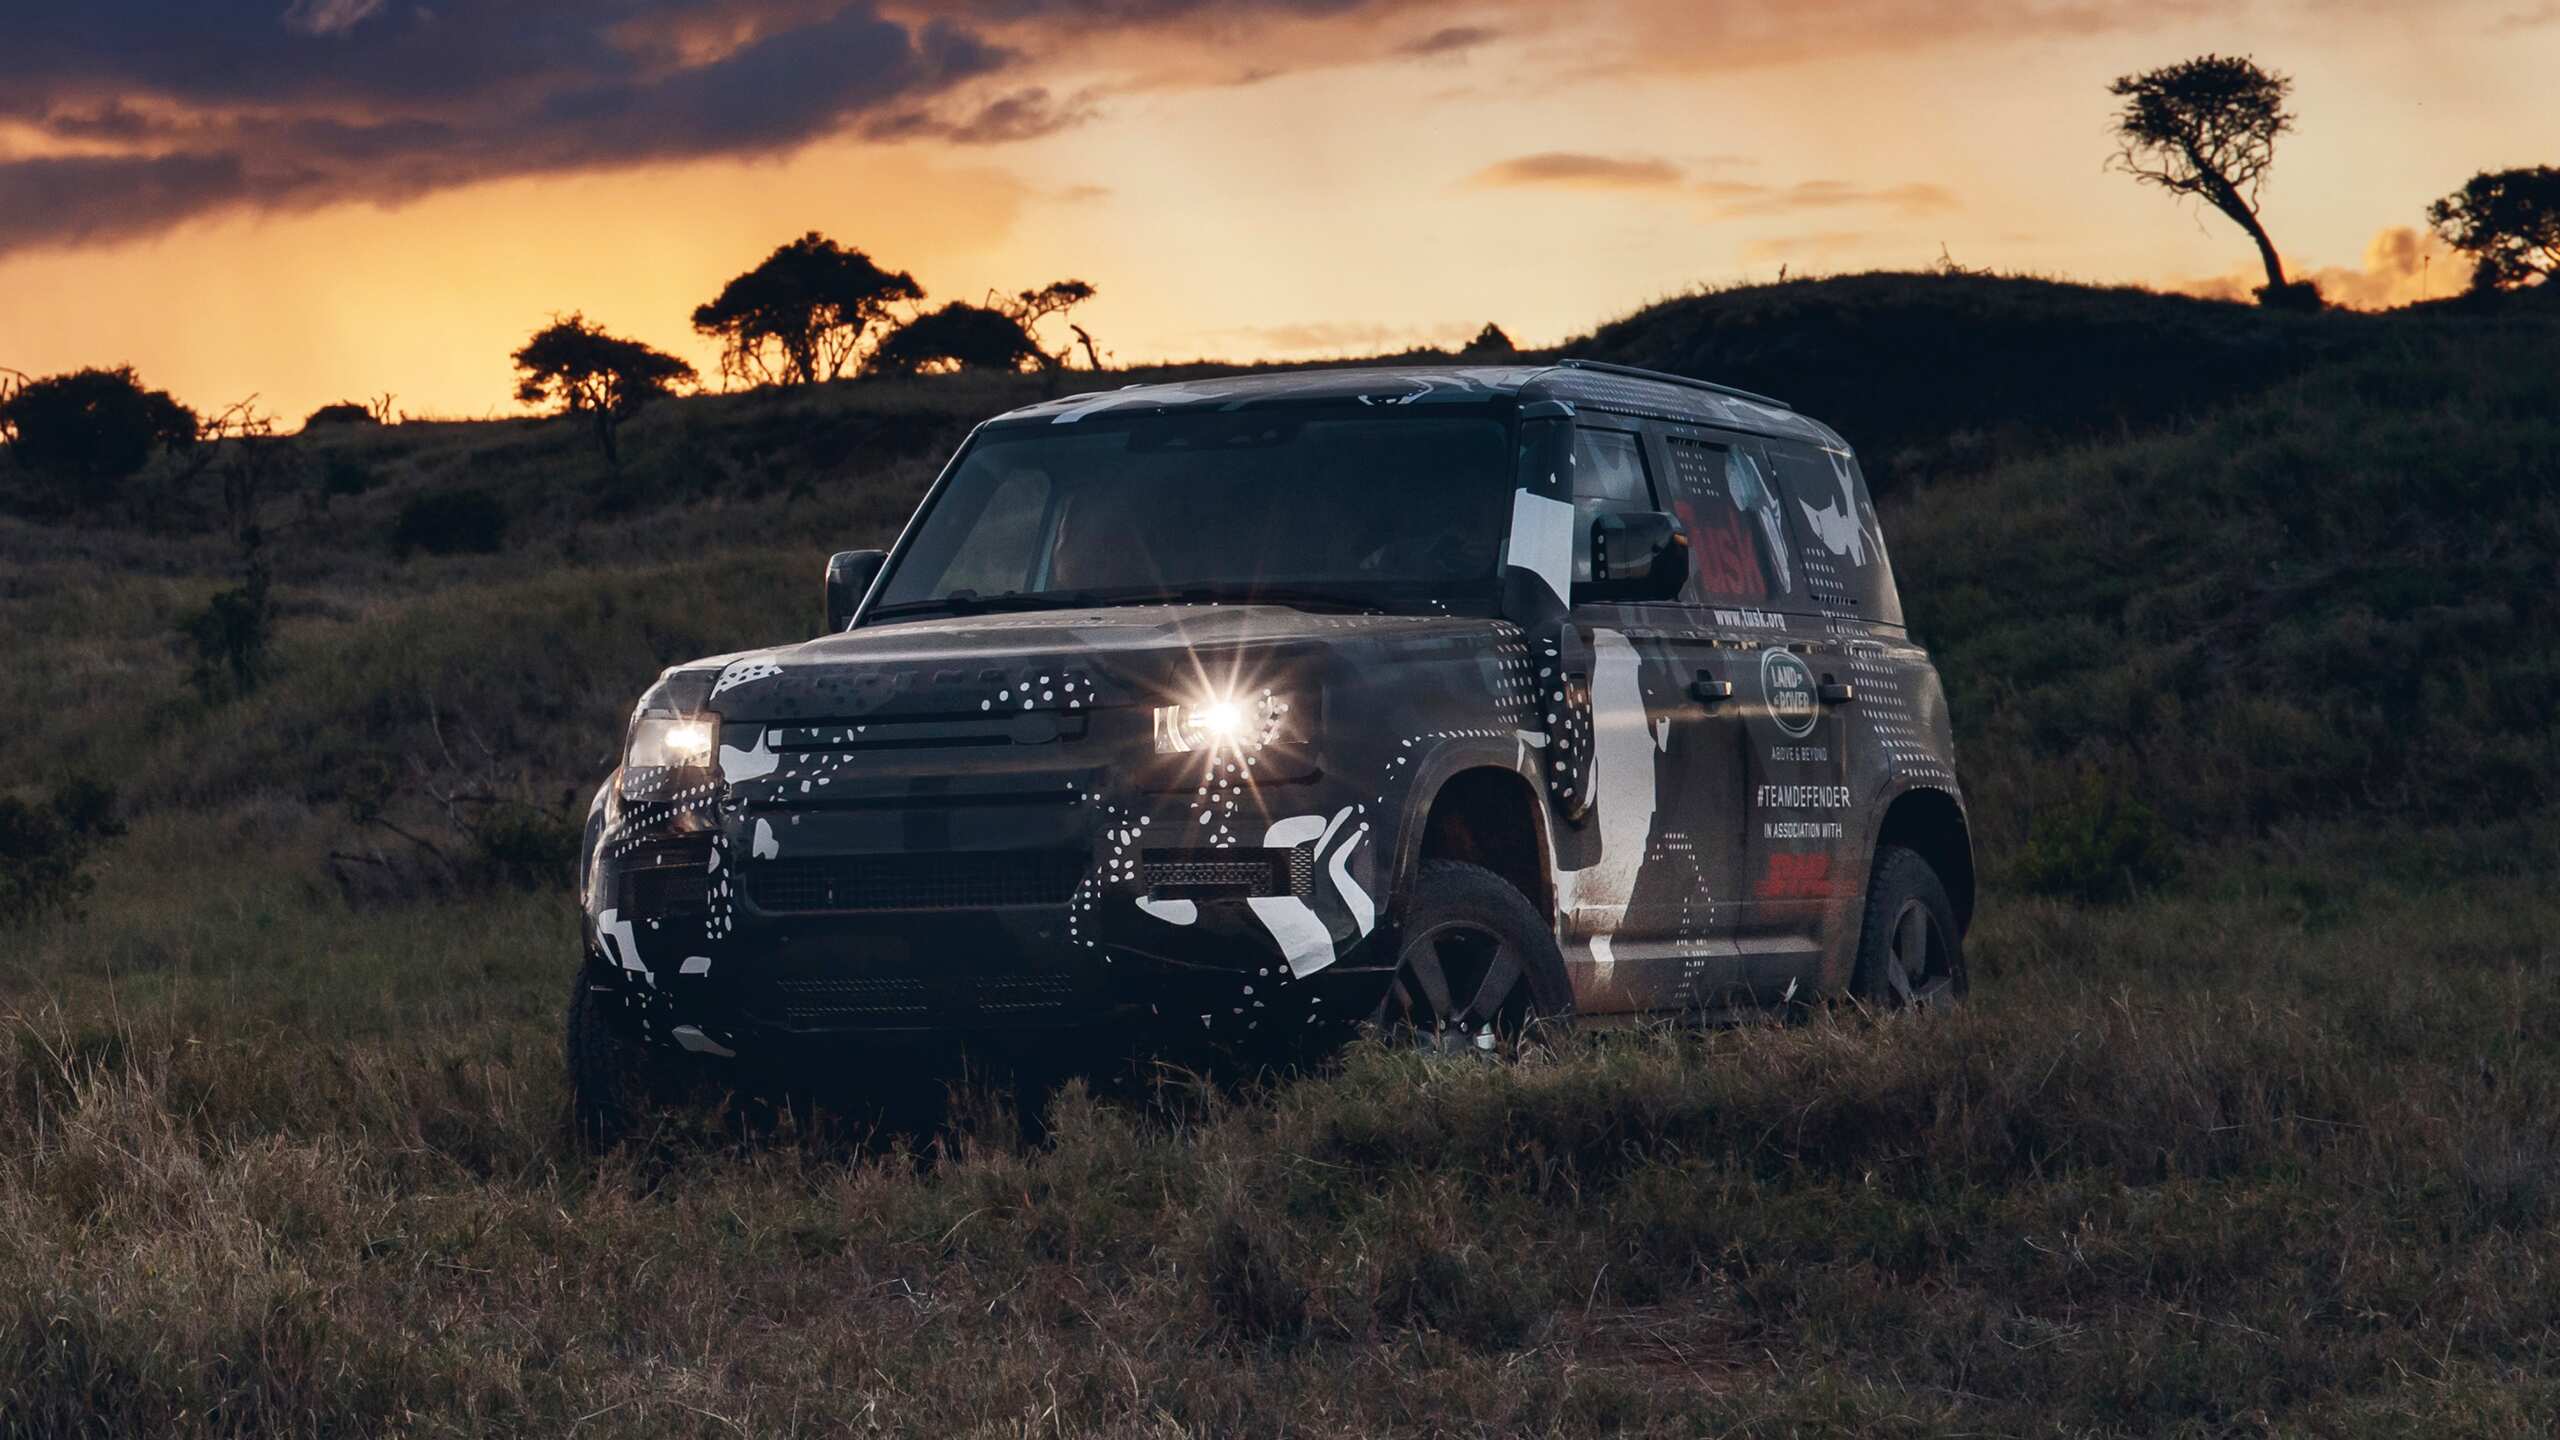 Land Rover Defender Completing Tusk Testing To Support Lion Conservation In Kenya